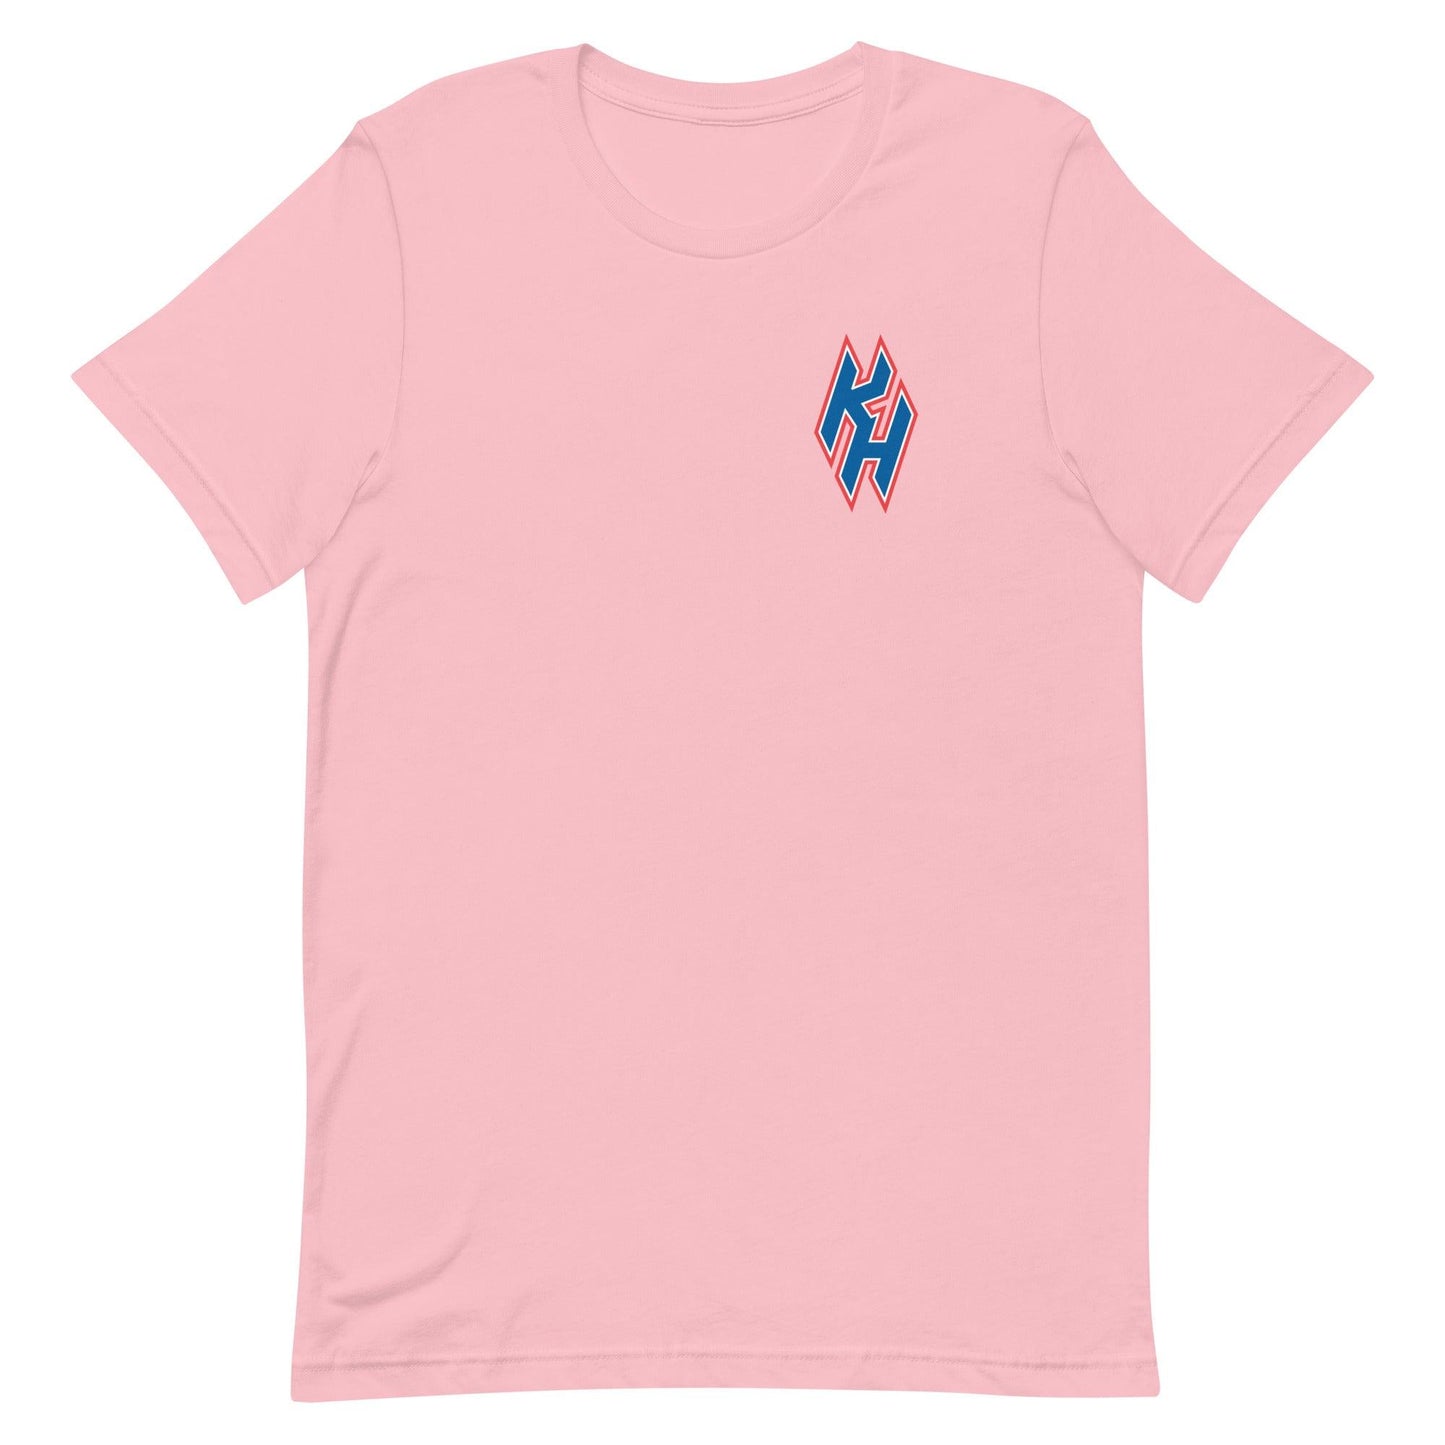 Kody Hoese "Essential" t-shirt - Fan Arch